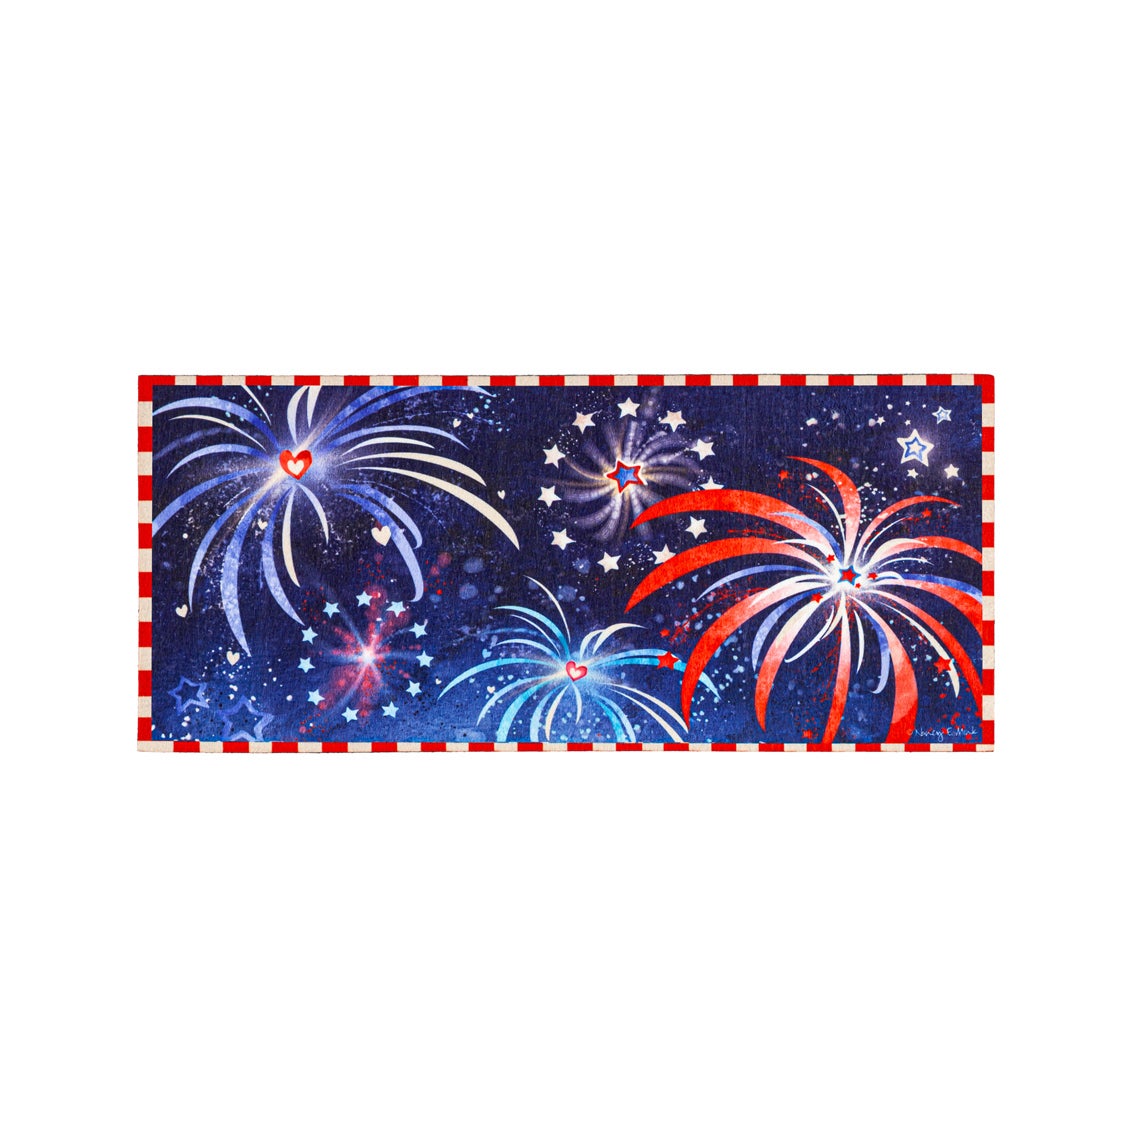 Independence Day Fireworks Sassafras Switch Mat